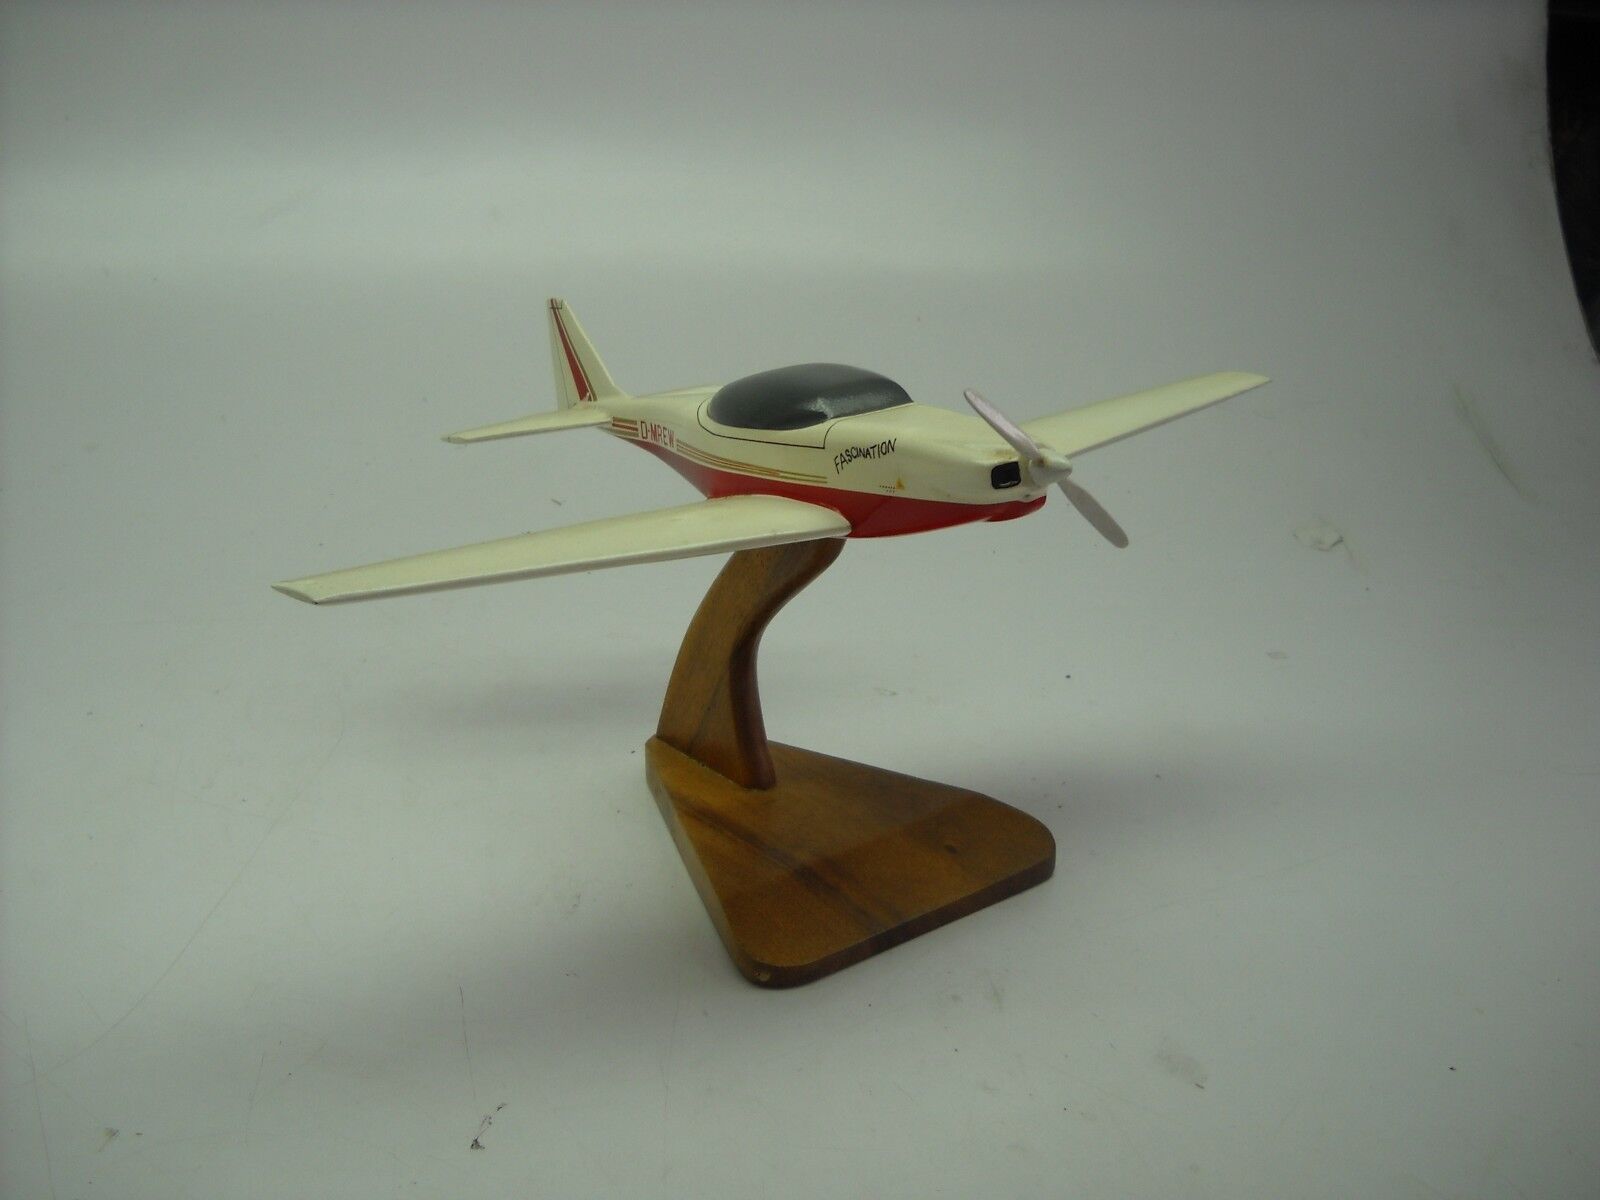 Dallach Fascination Private Airplane Desktop Kiln Dry Wood Model Replica Regular